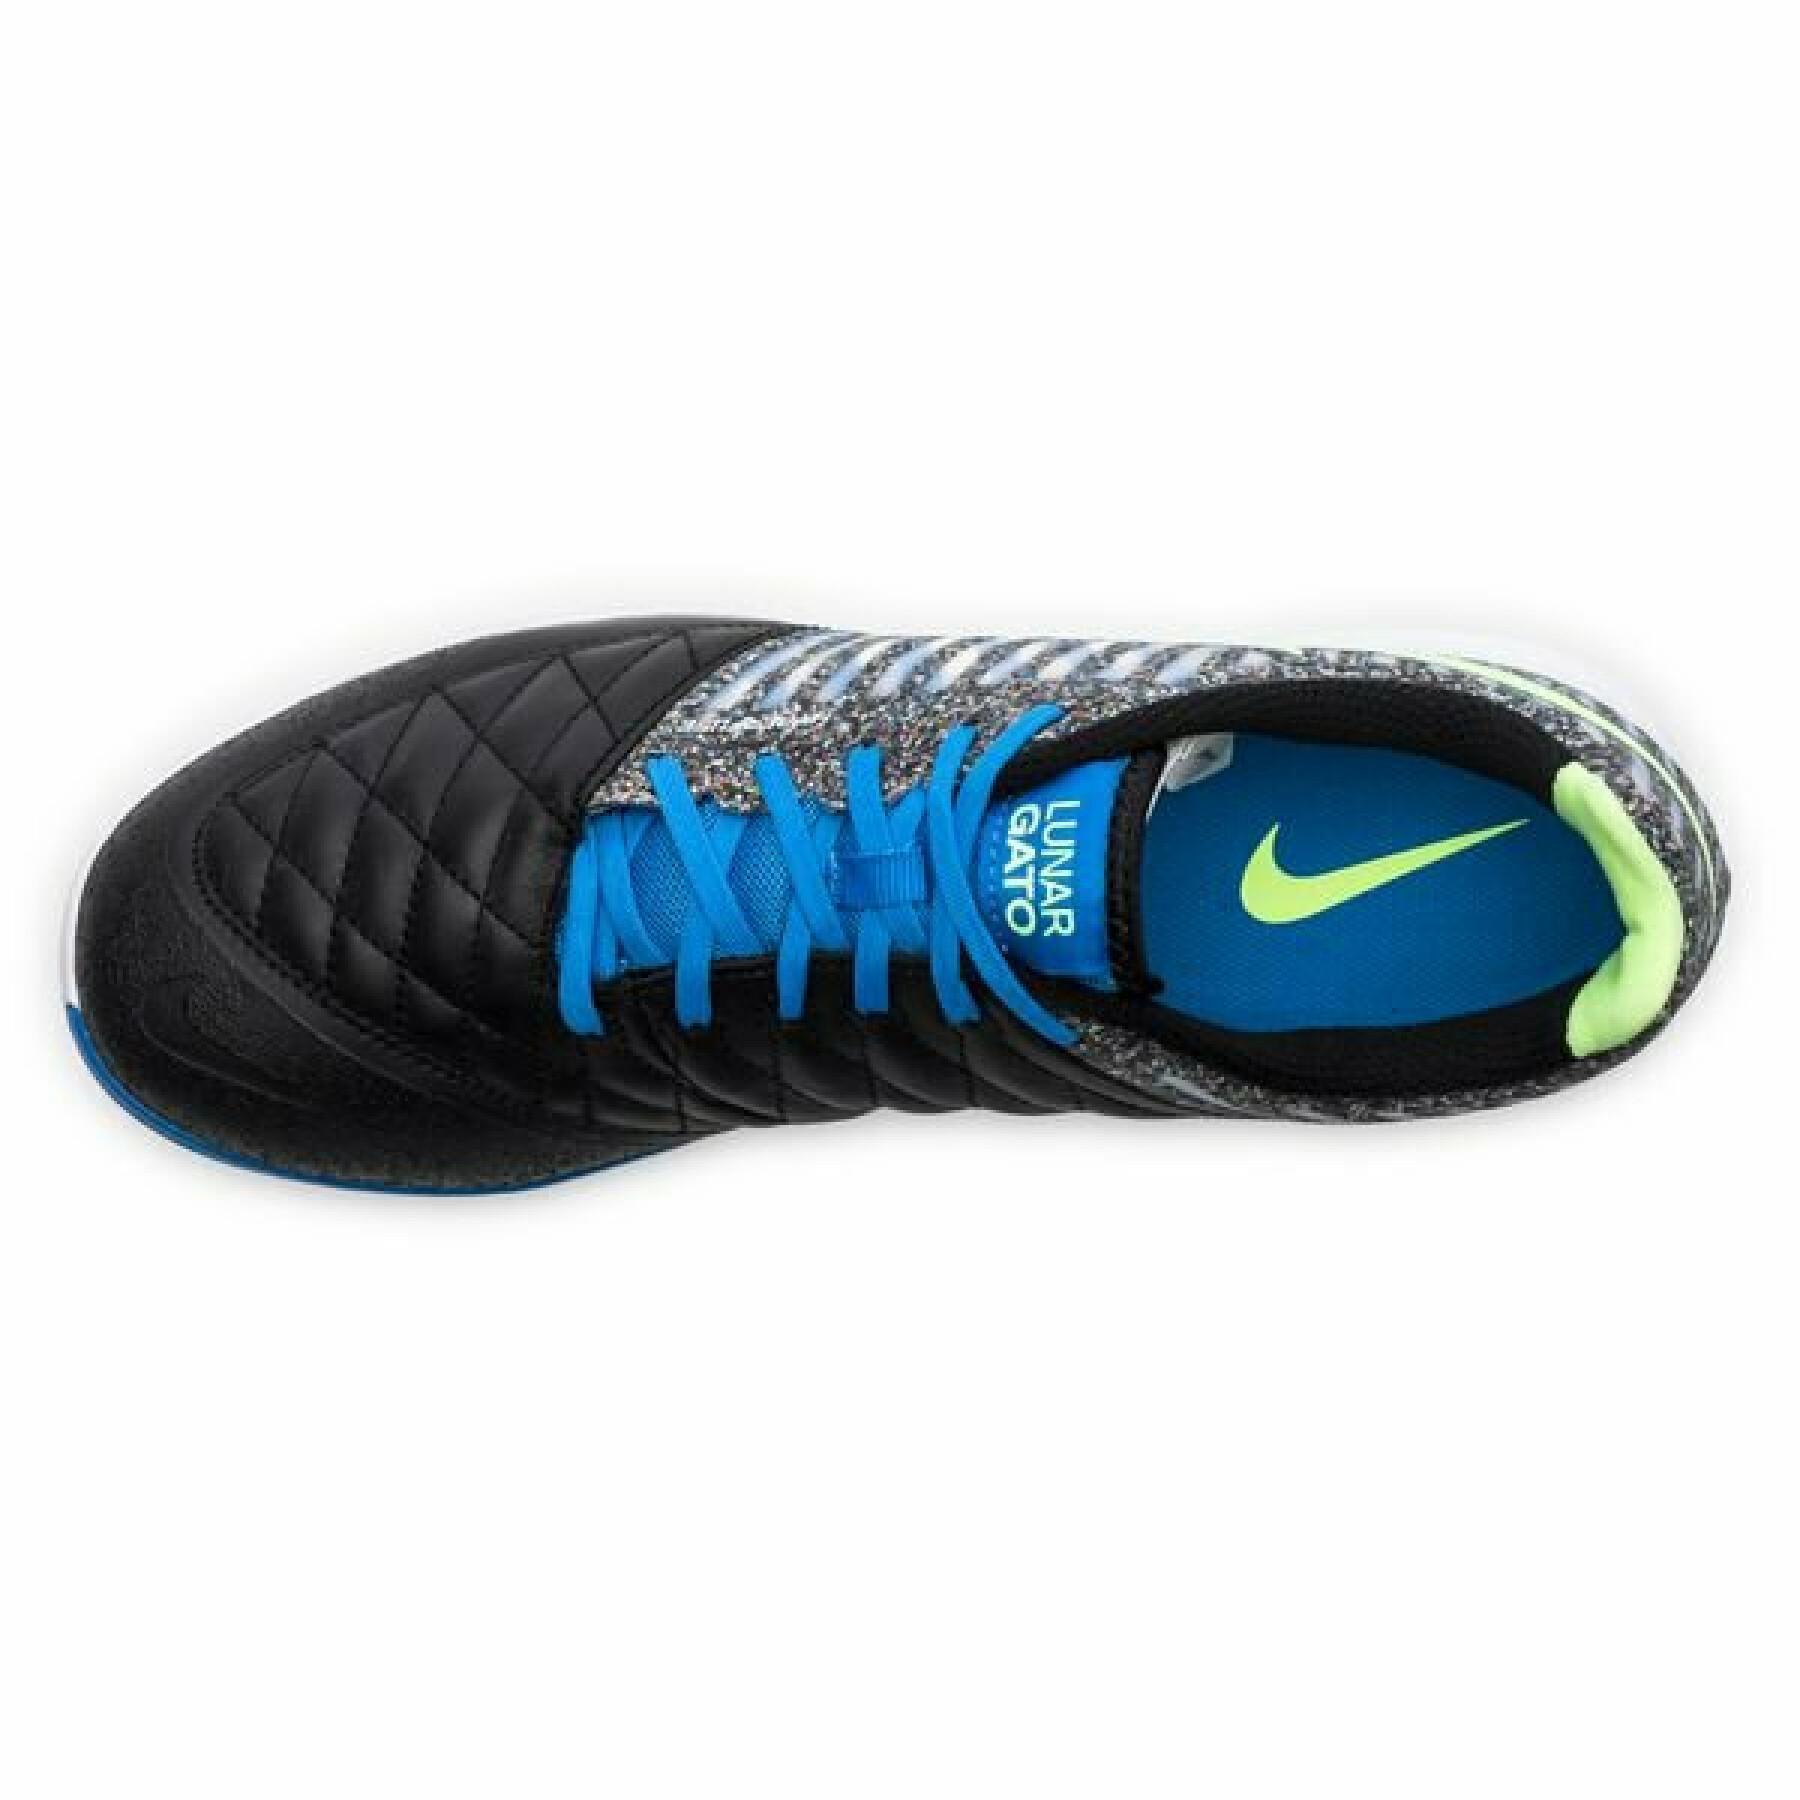 Chaussures de football Nike Lunar Gato II IC